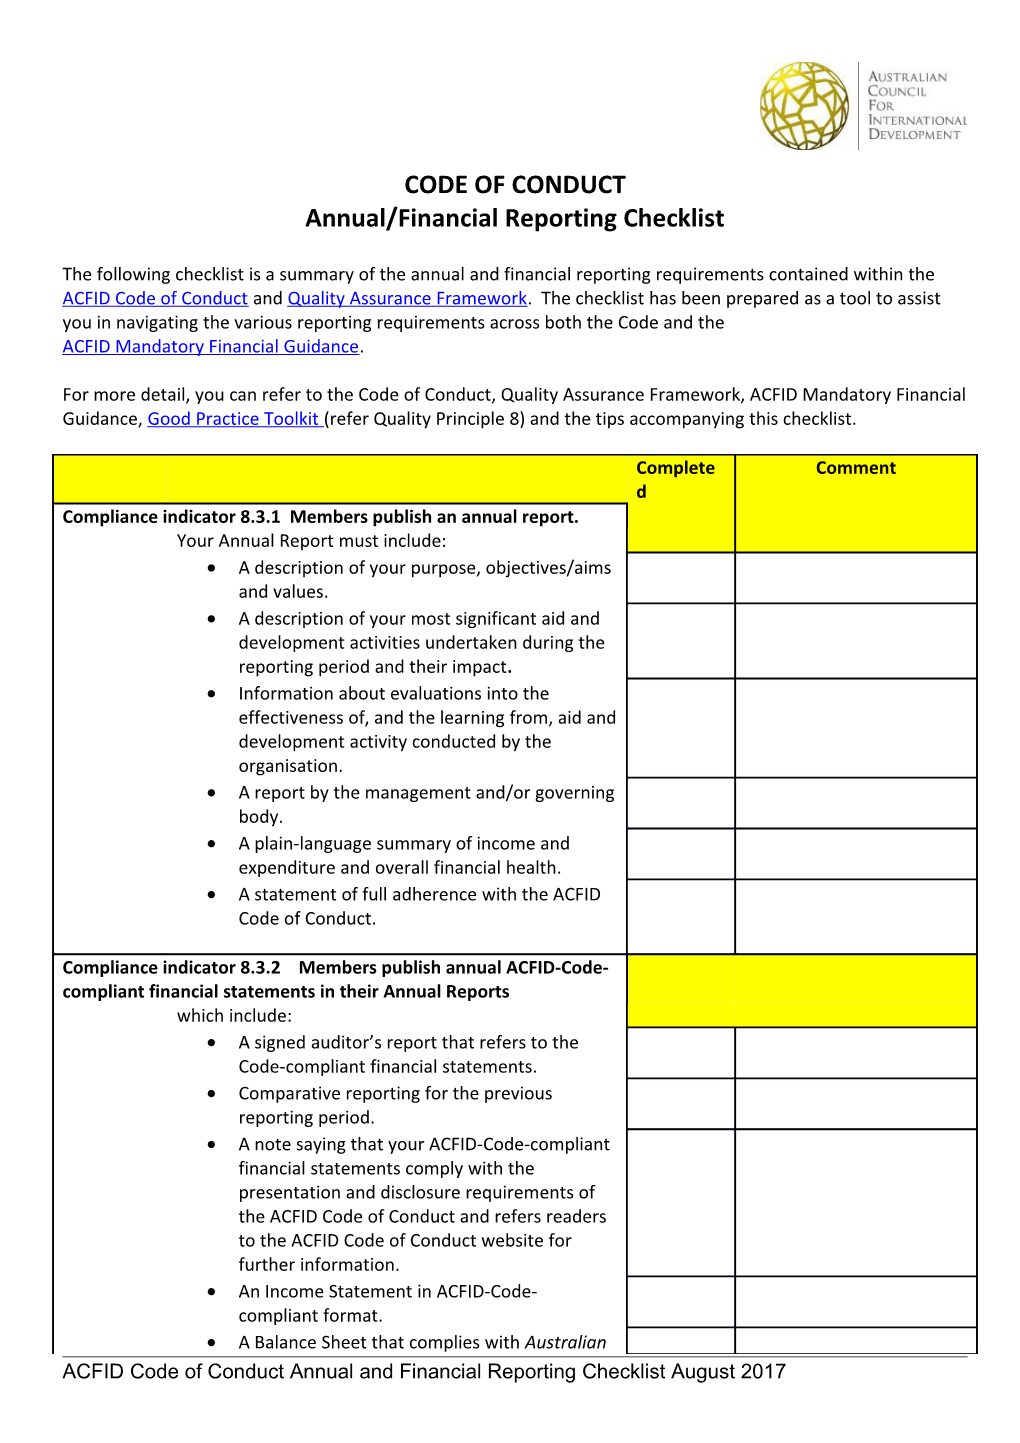 Annual/Financial Reporting Checklist